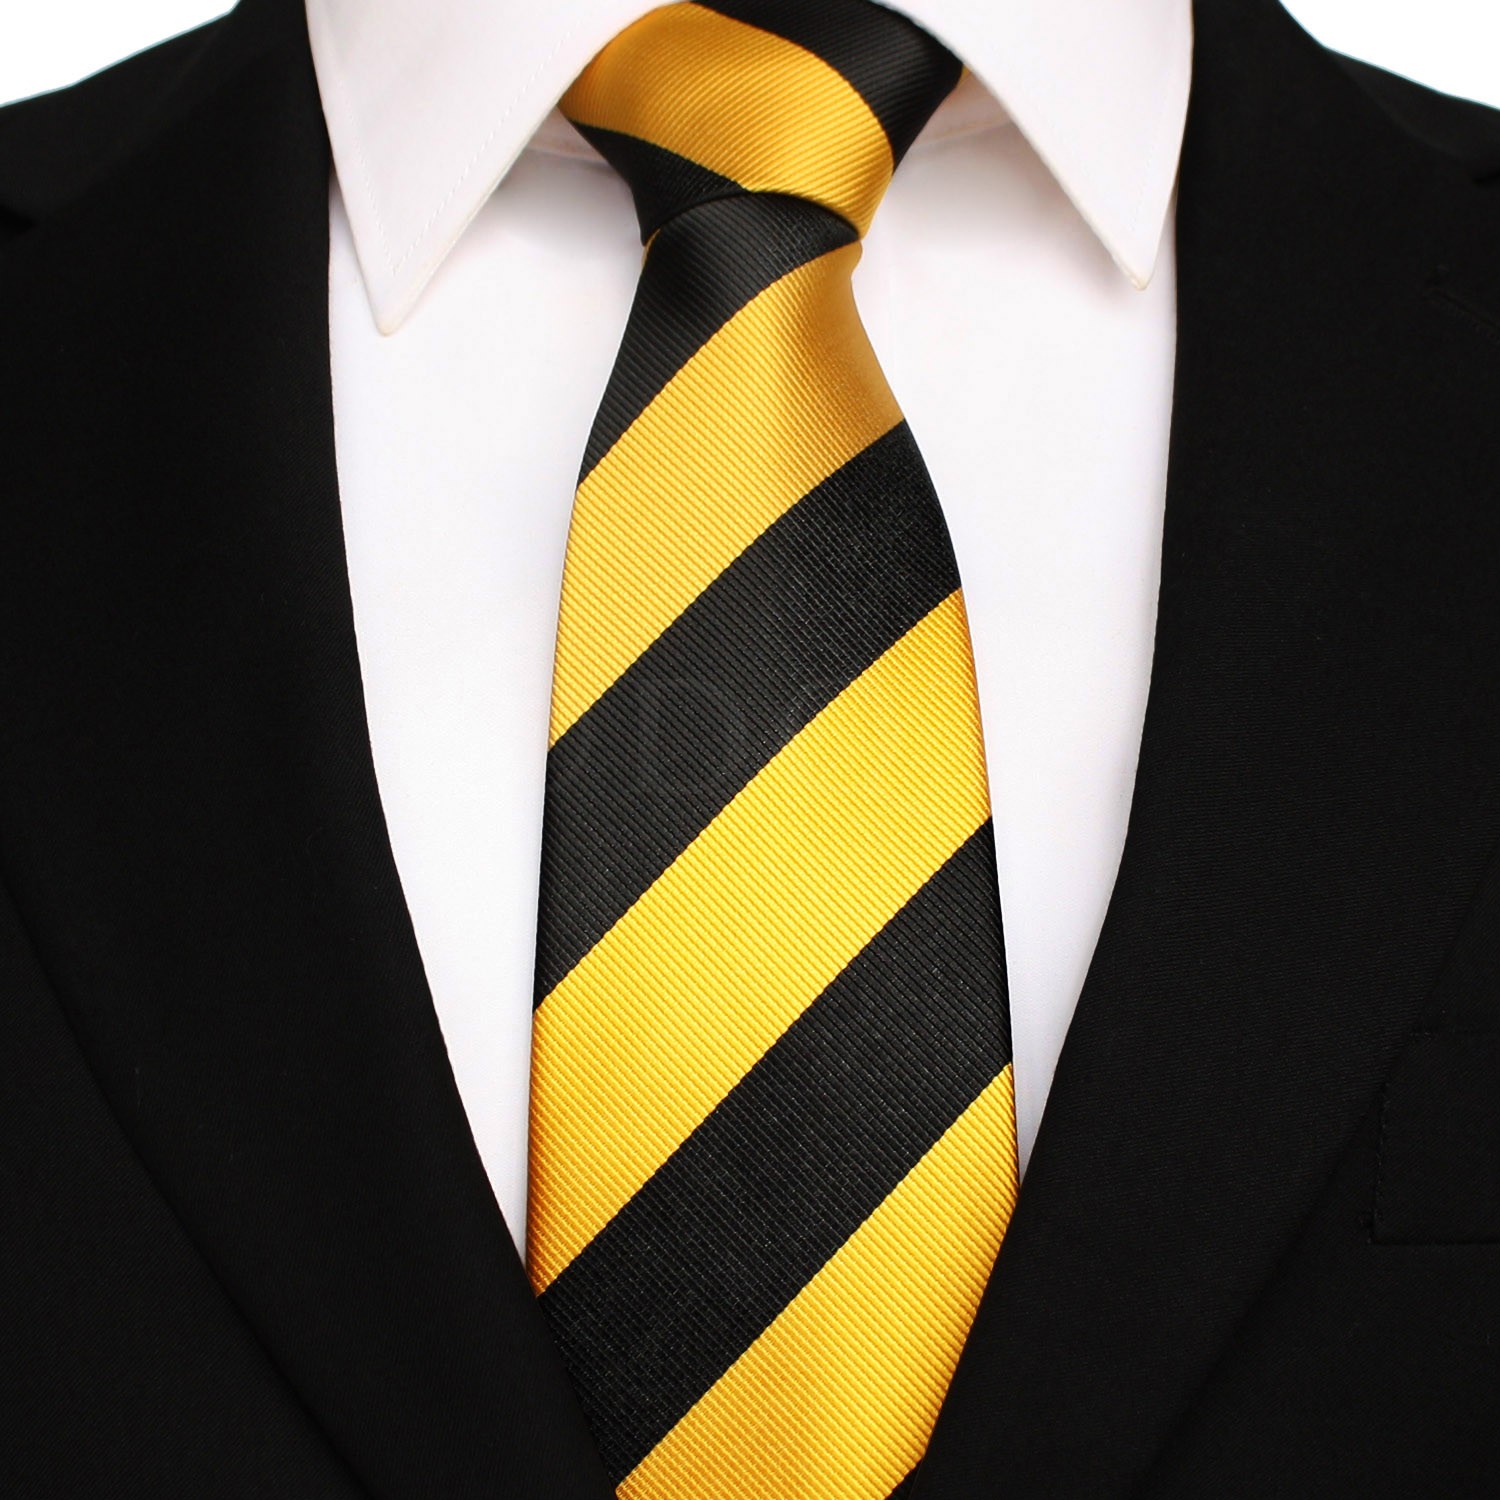 Картинка галстук мужской. Стильный галстук. Галстук желтый. Галстук желто черный. Пиджак с желтым галстуком.